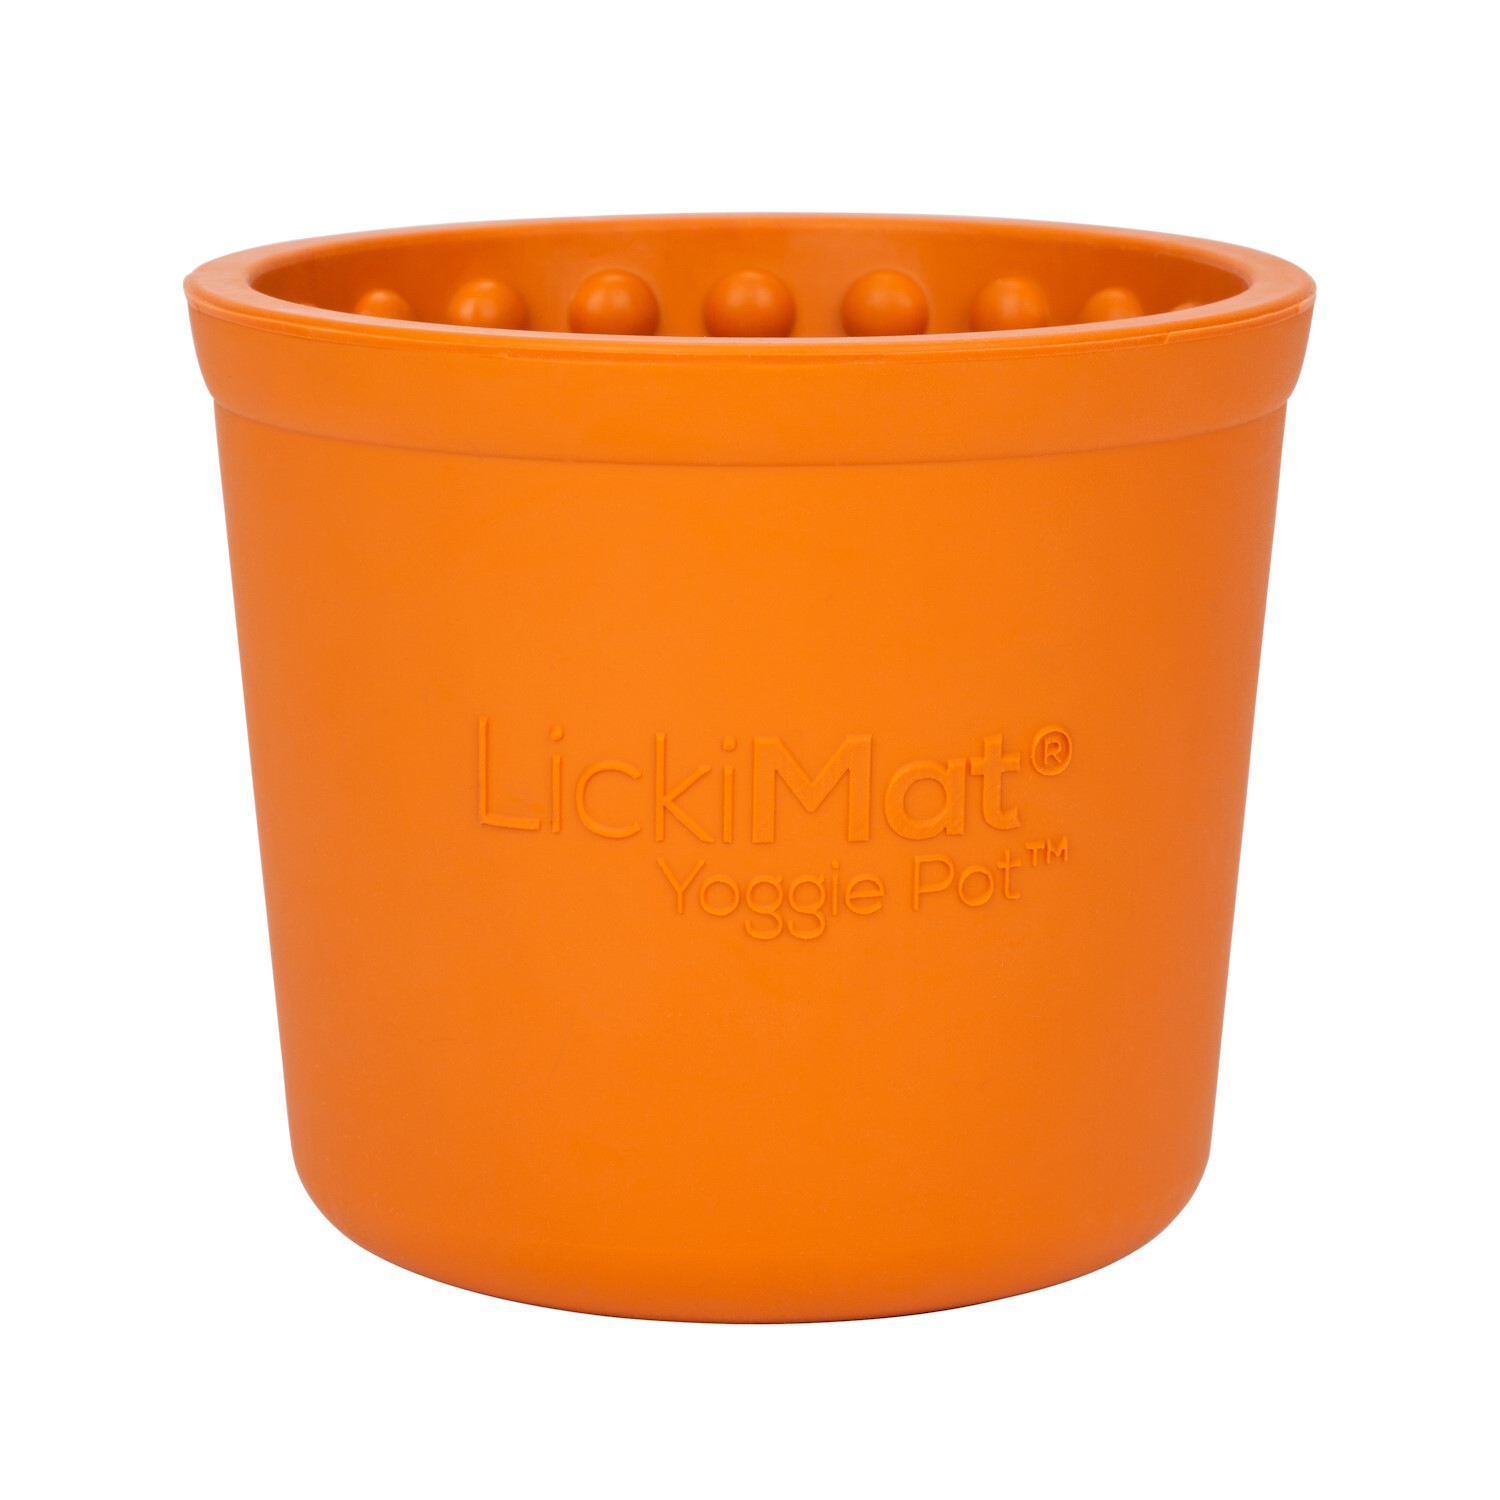 Lickimat Yoggie Pot Slow Feeder Dog Bowl for Wet & Dry Food image 1